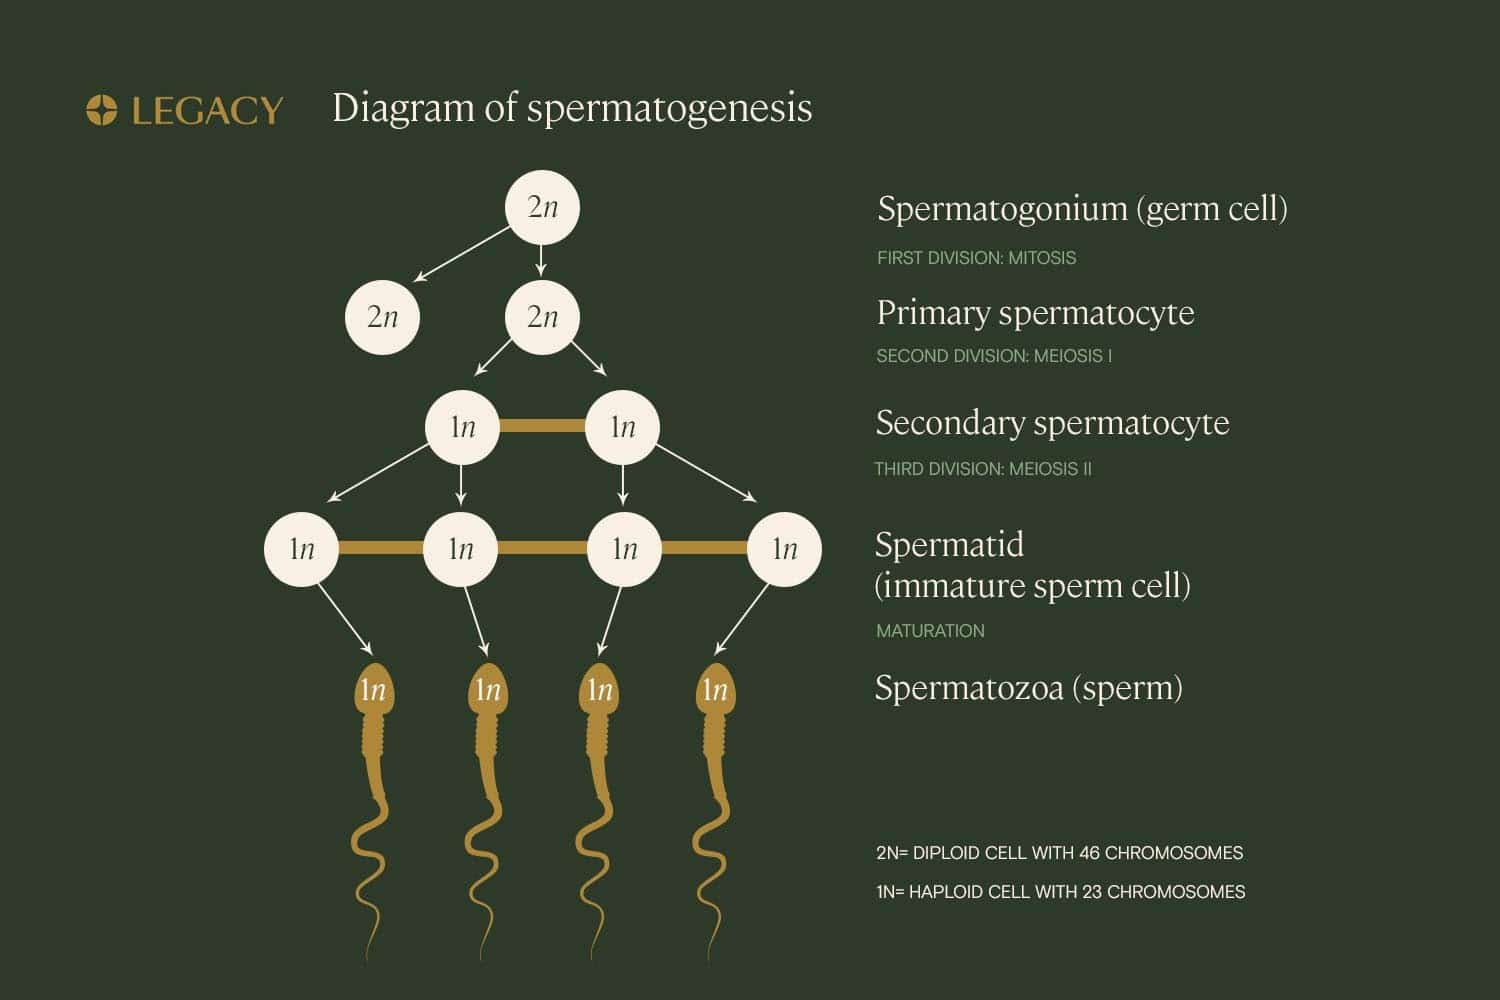 Spermatogenesis process